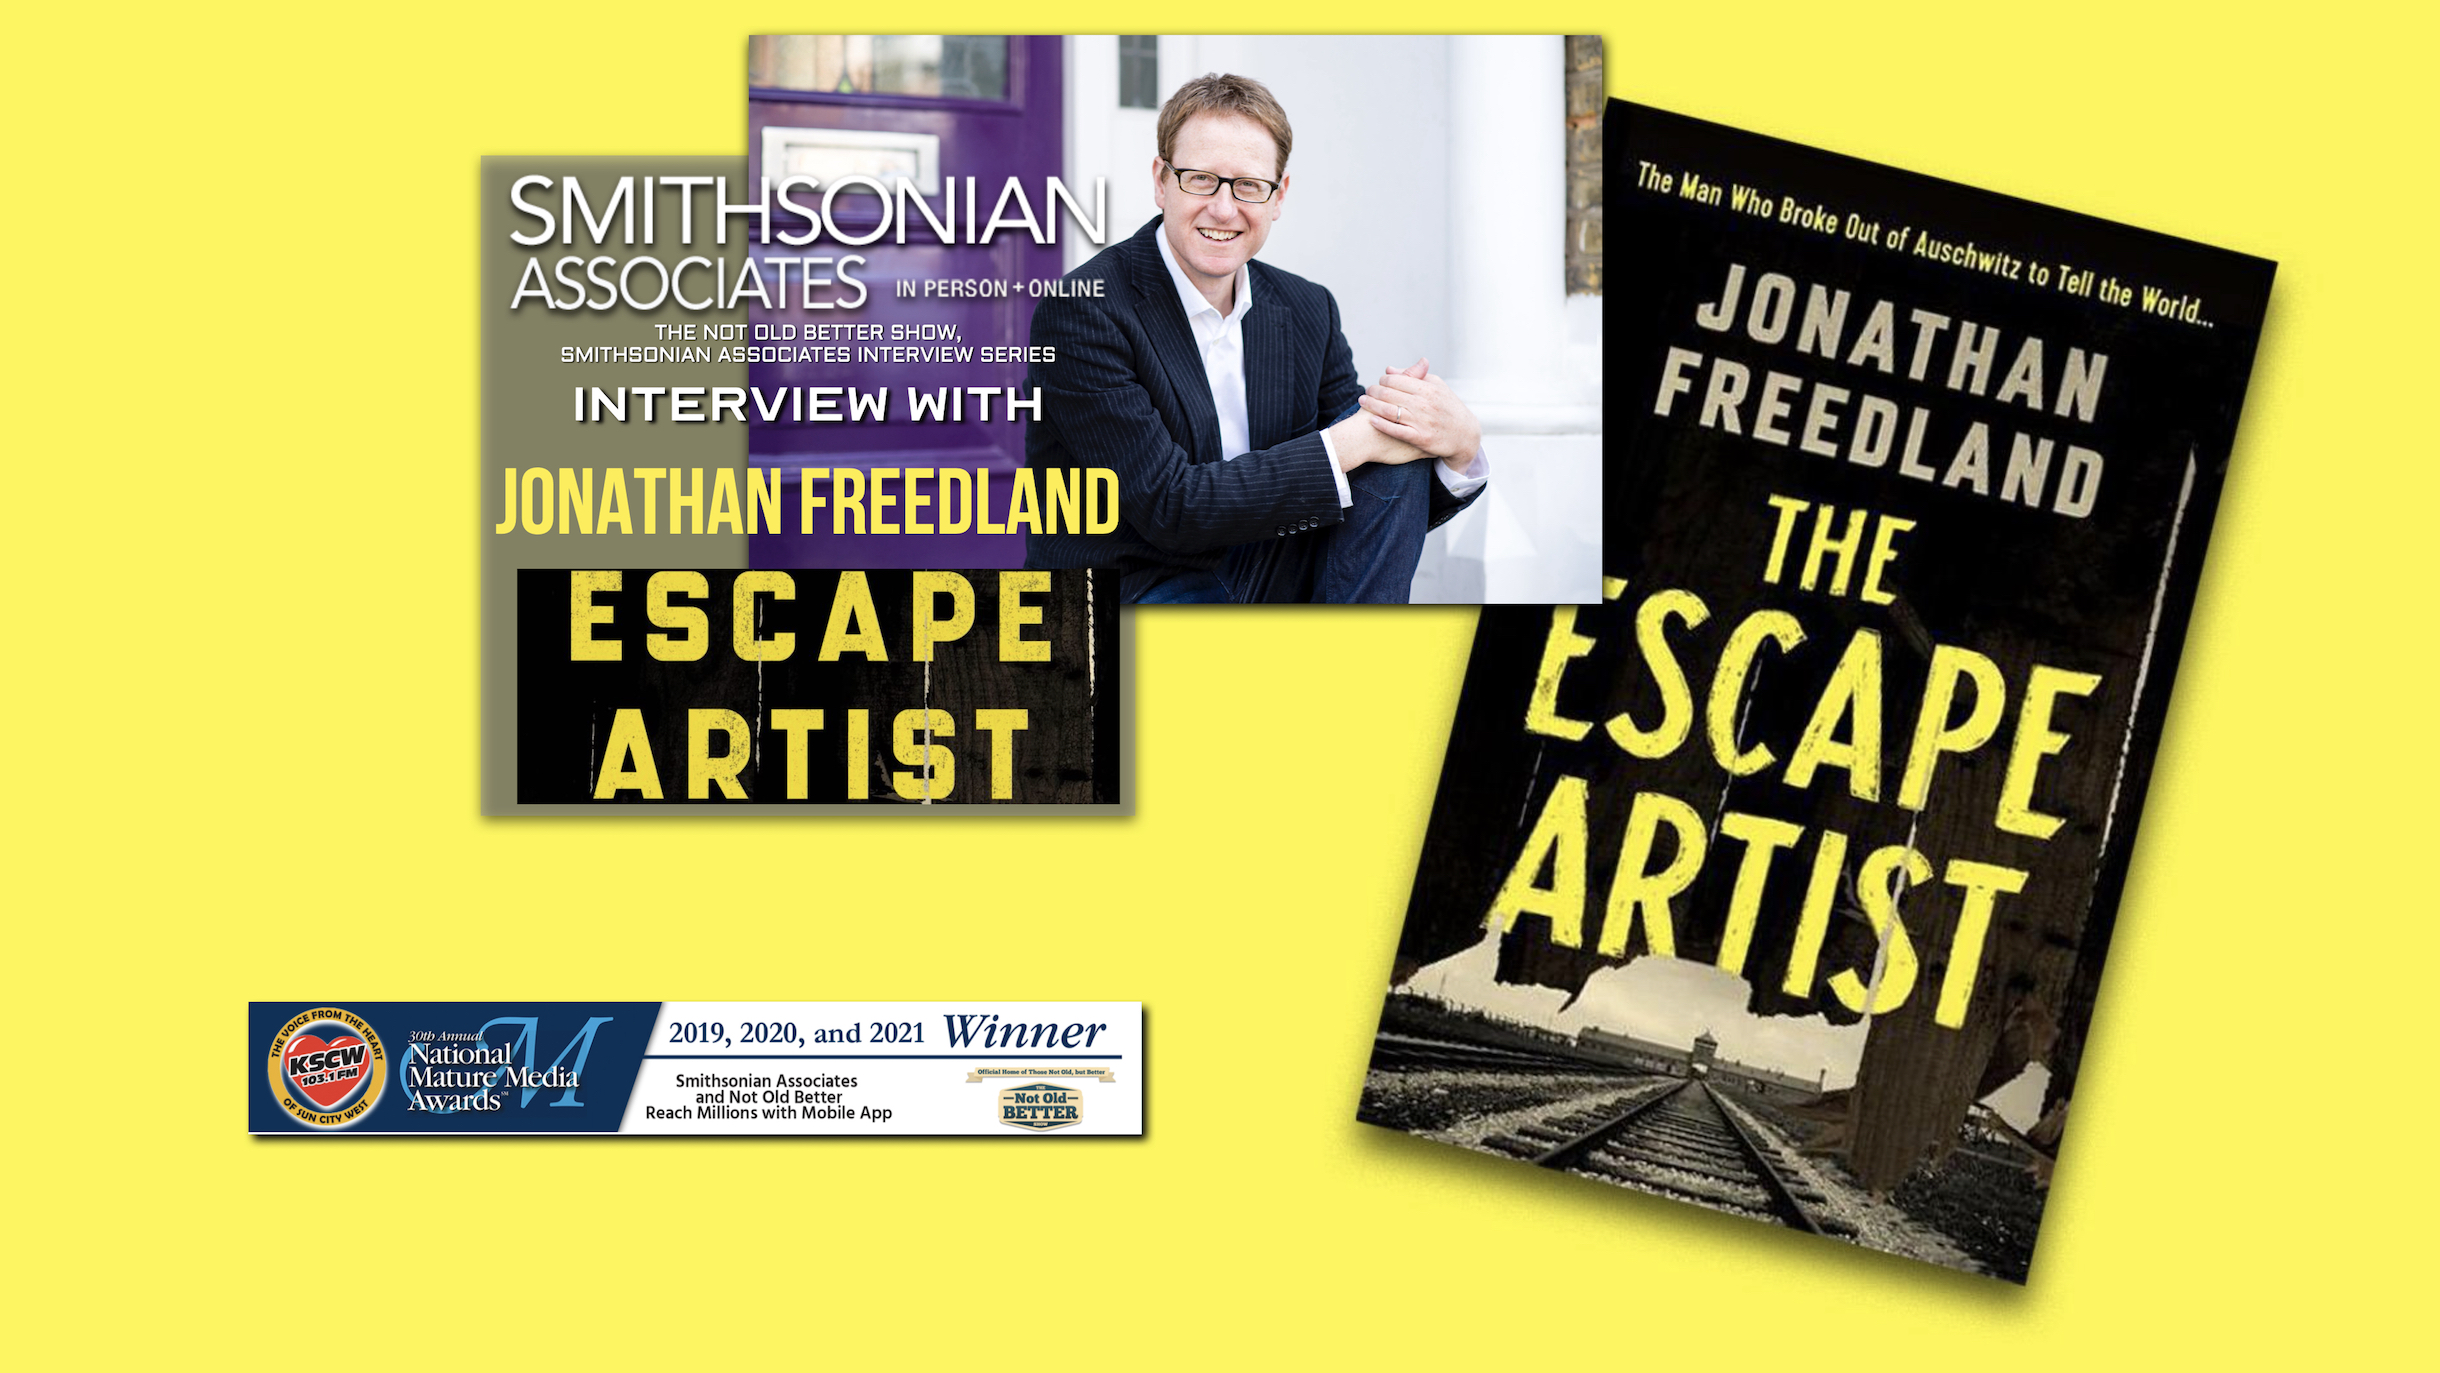 The Escape Artist – Jonathan Freedland